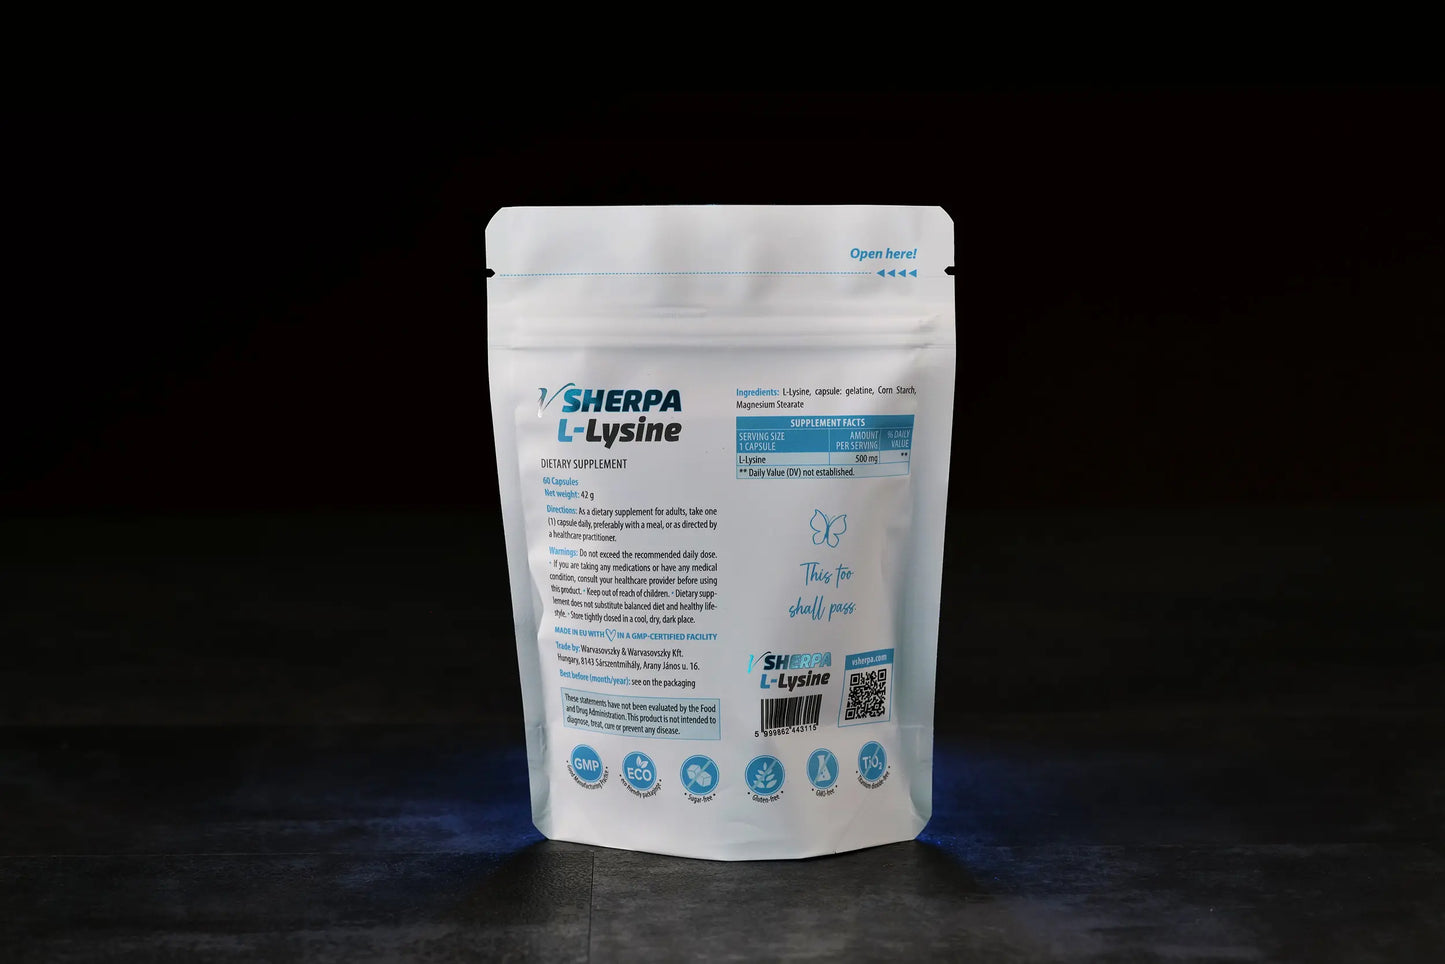 vSherpa L-Lysine Dietary Supplement